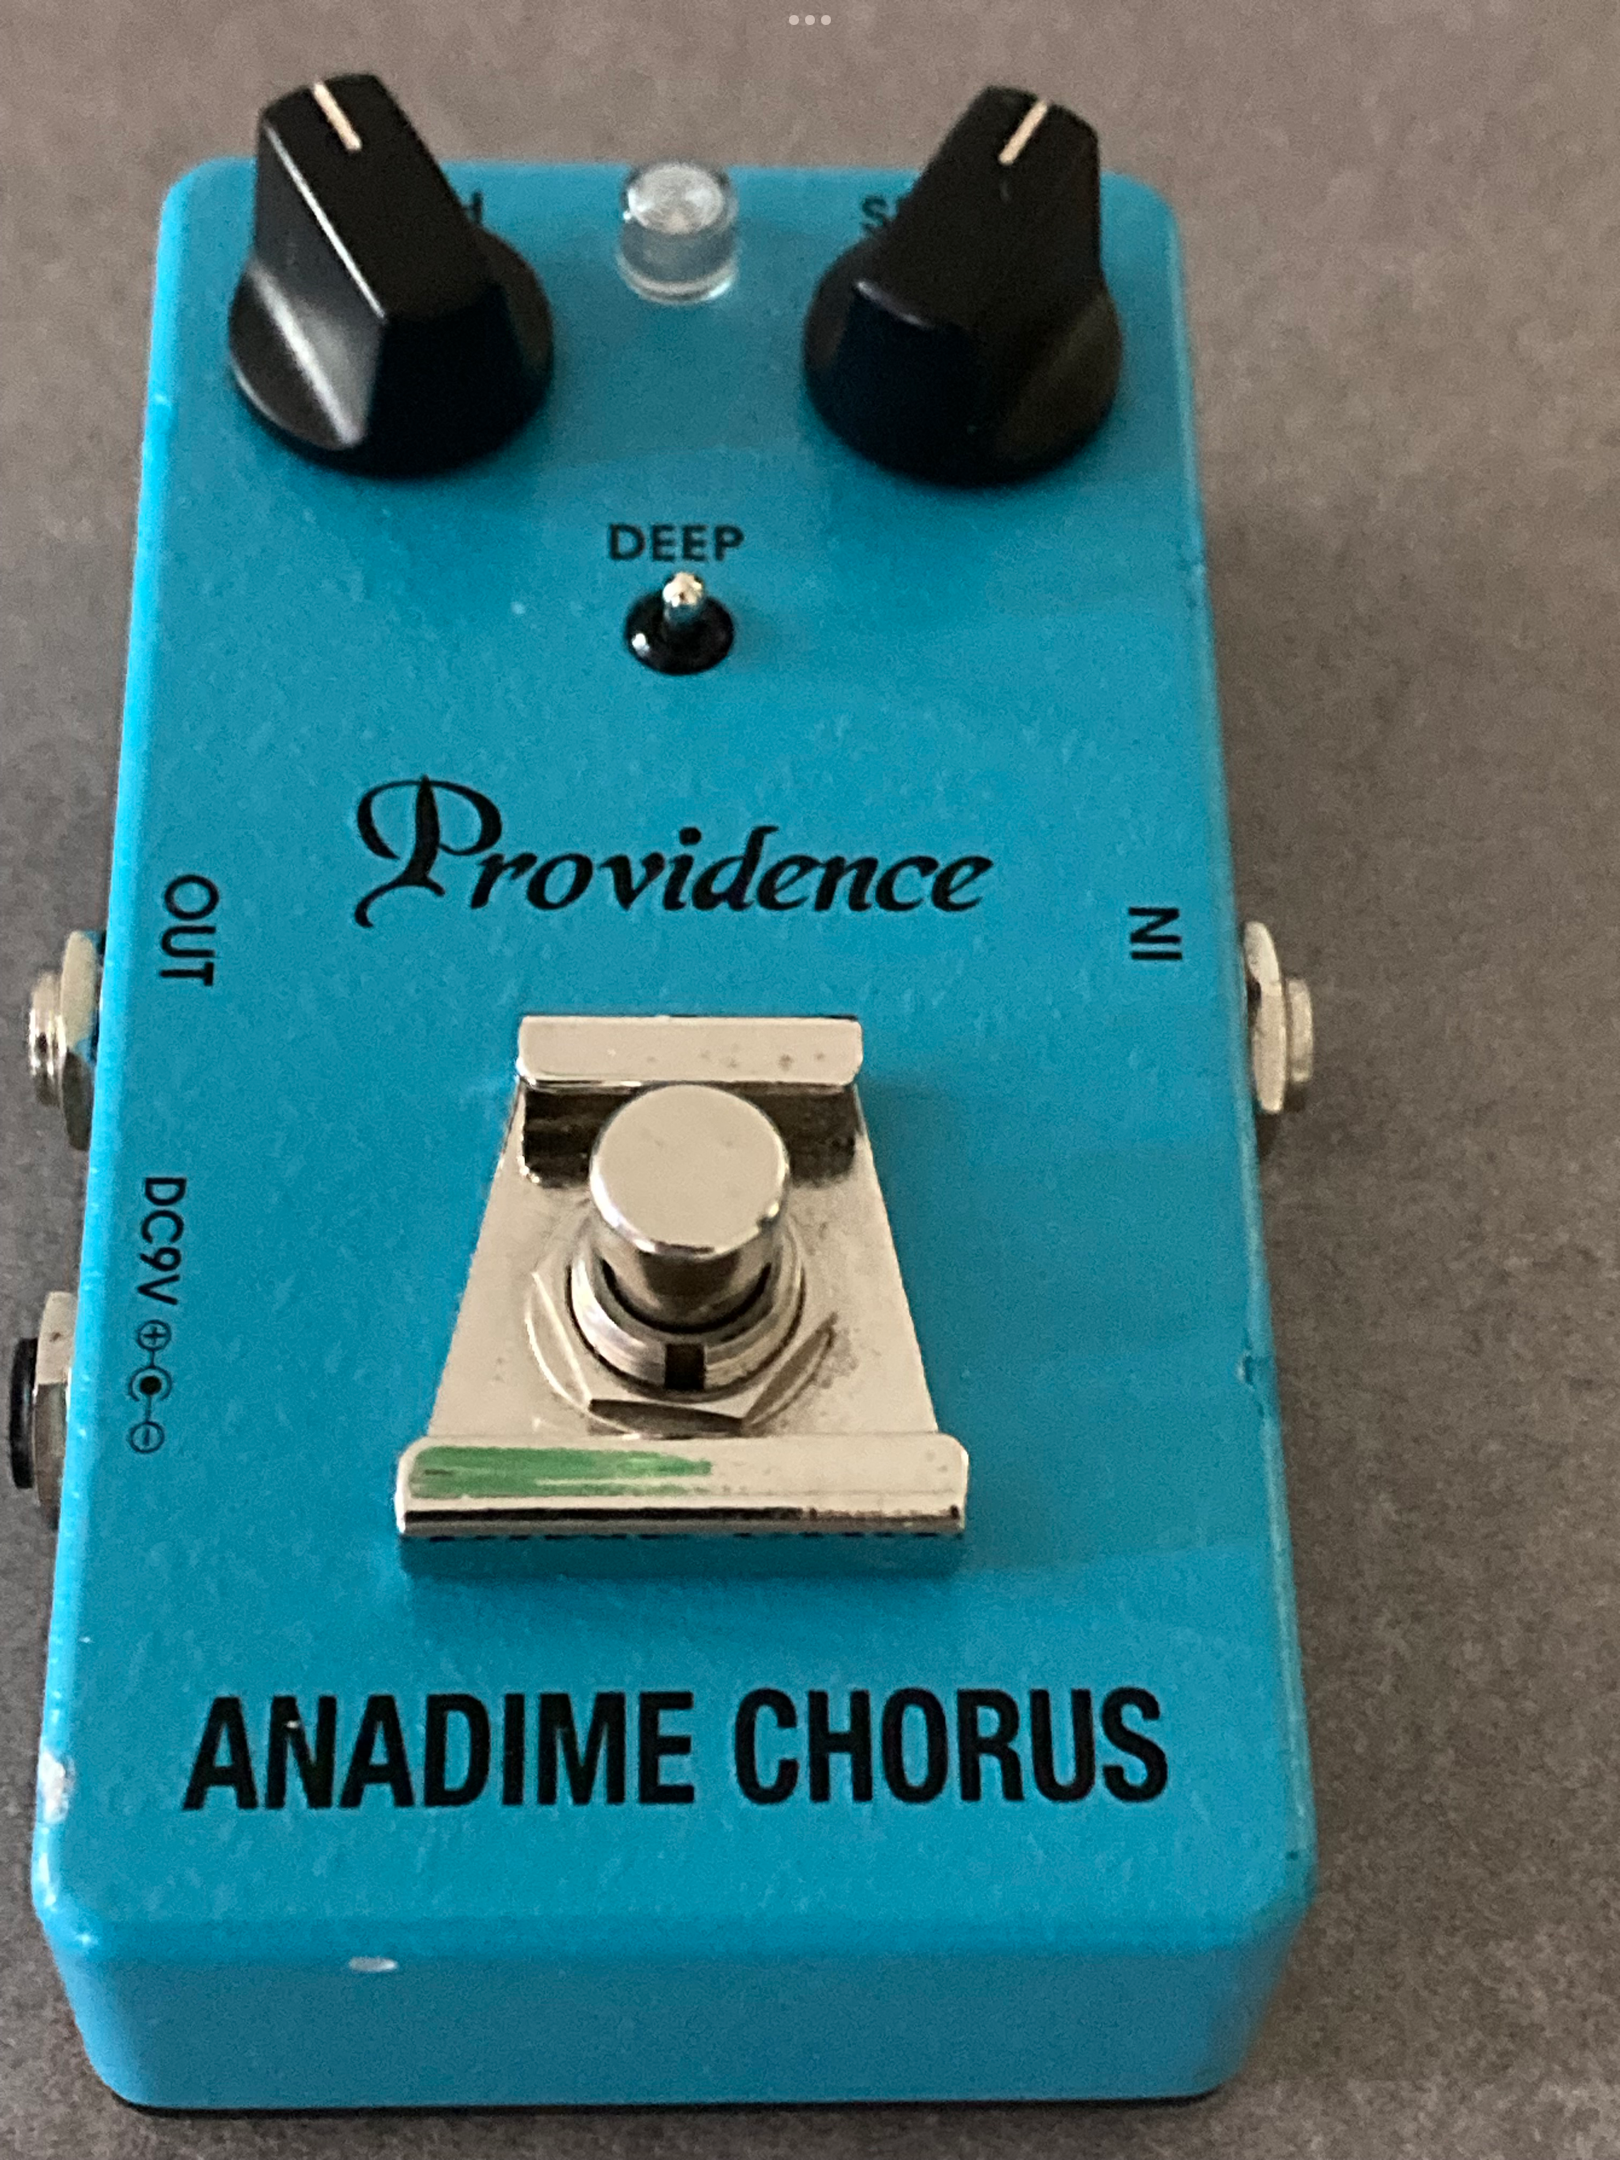 Anadime Chorus ADC-3 - Providence Anadime Chorus ADC-3 - Audiofanzine